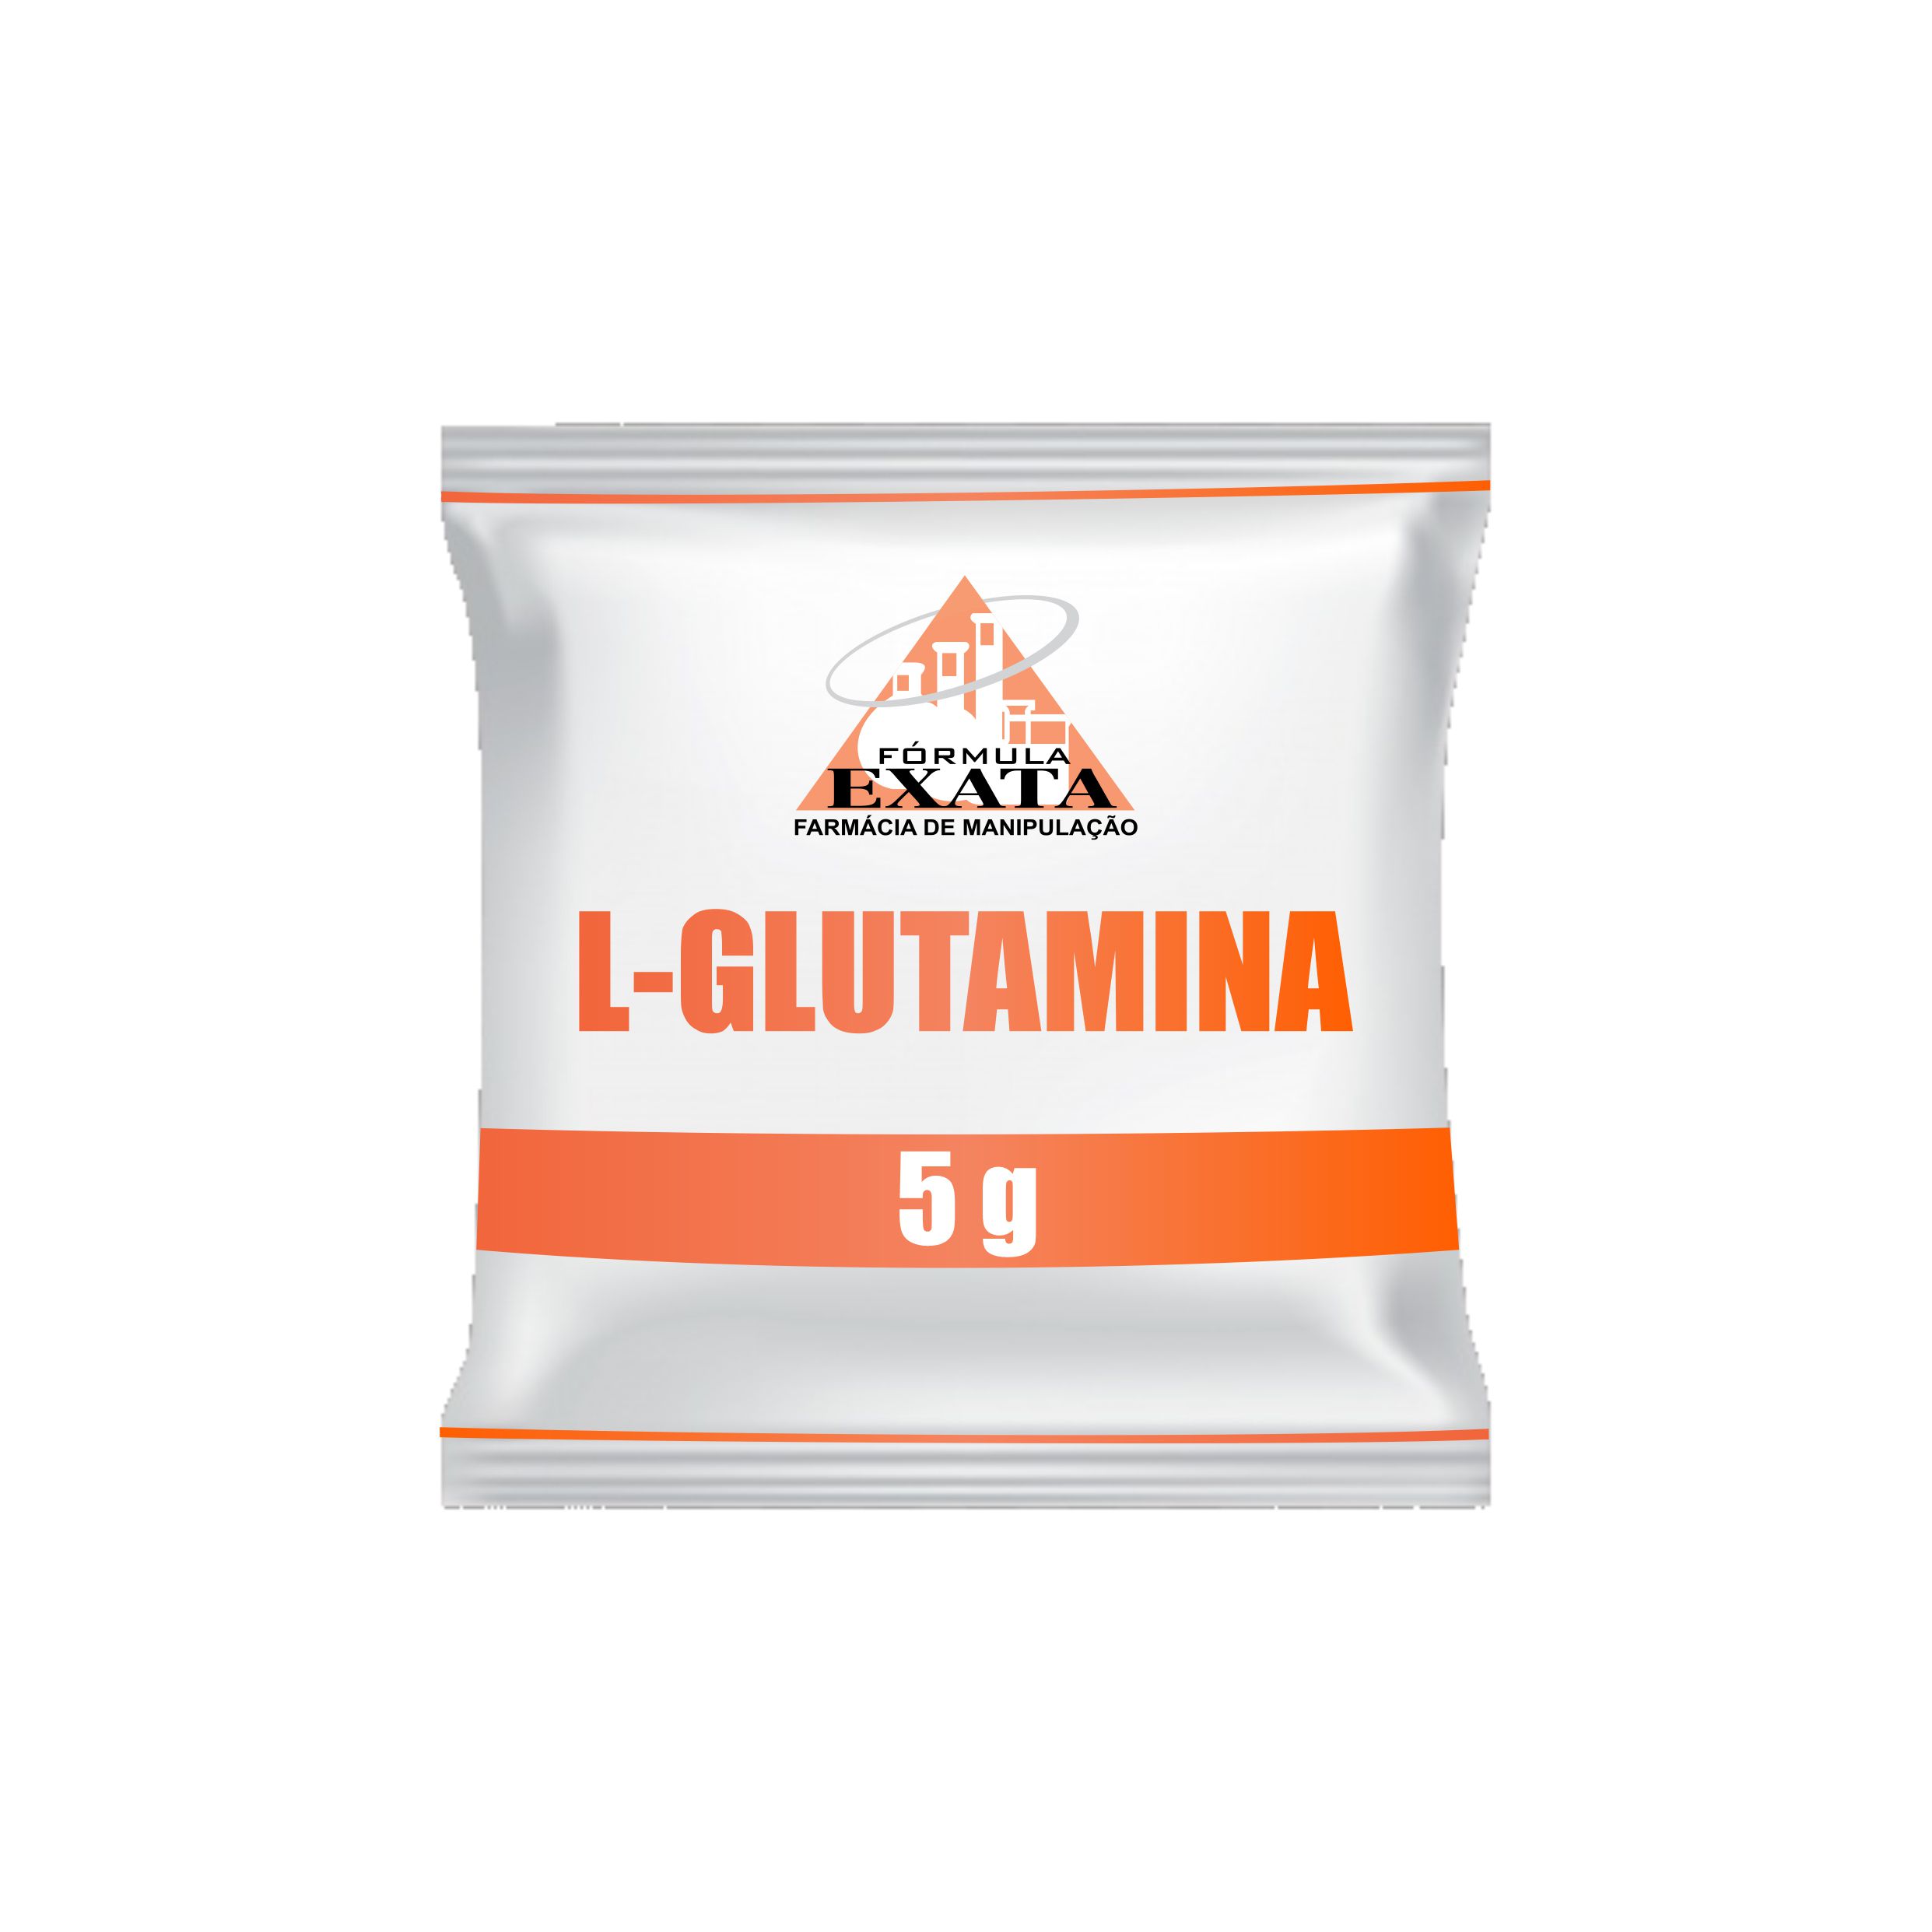 L-GLUTAMINA - Farmácia Fórmula Exata